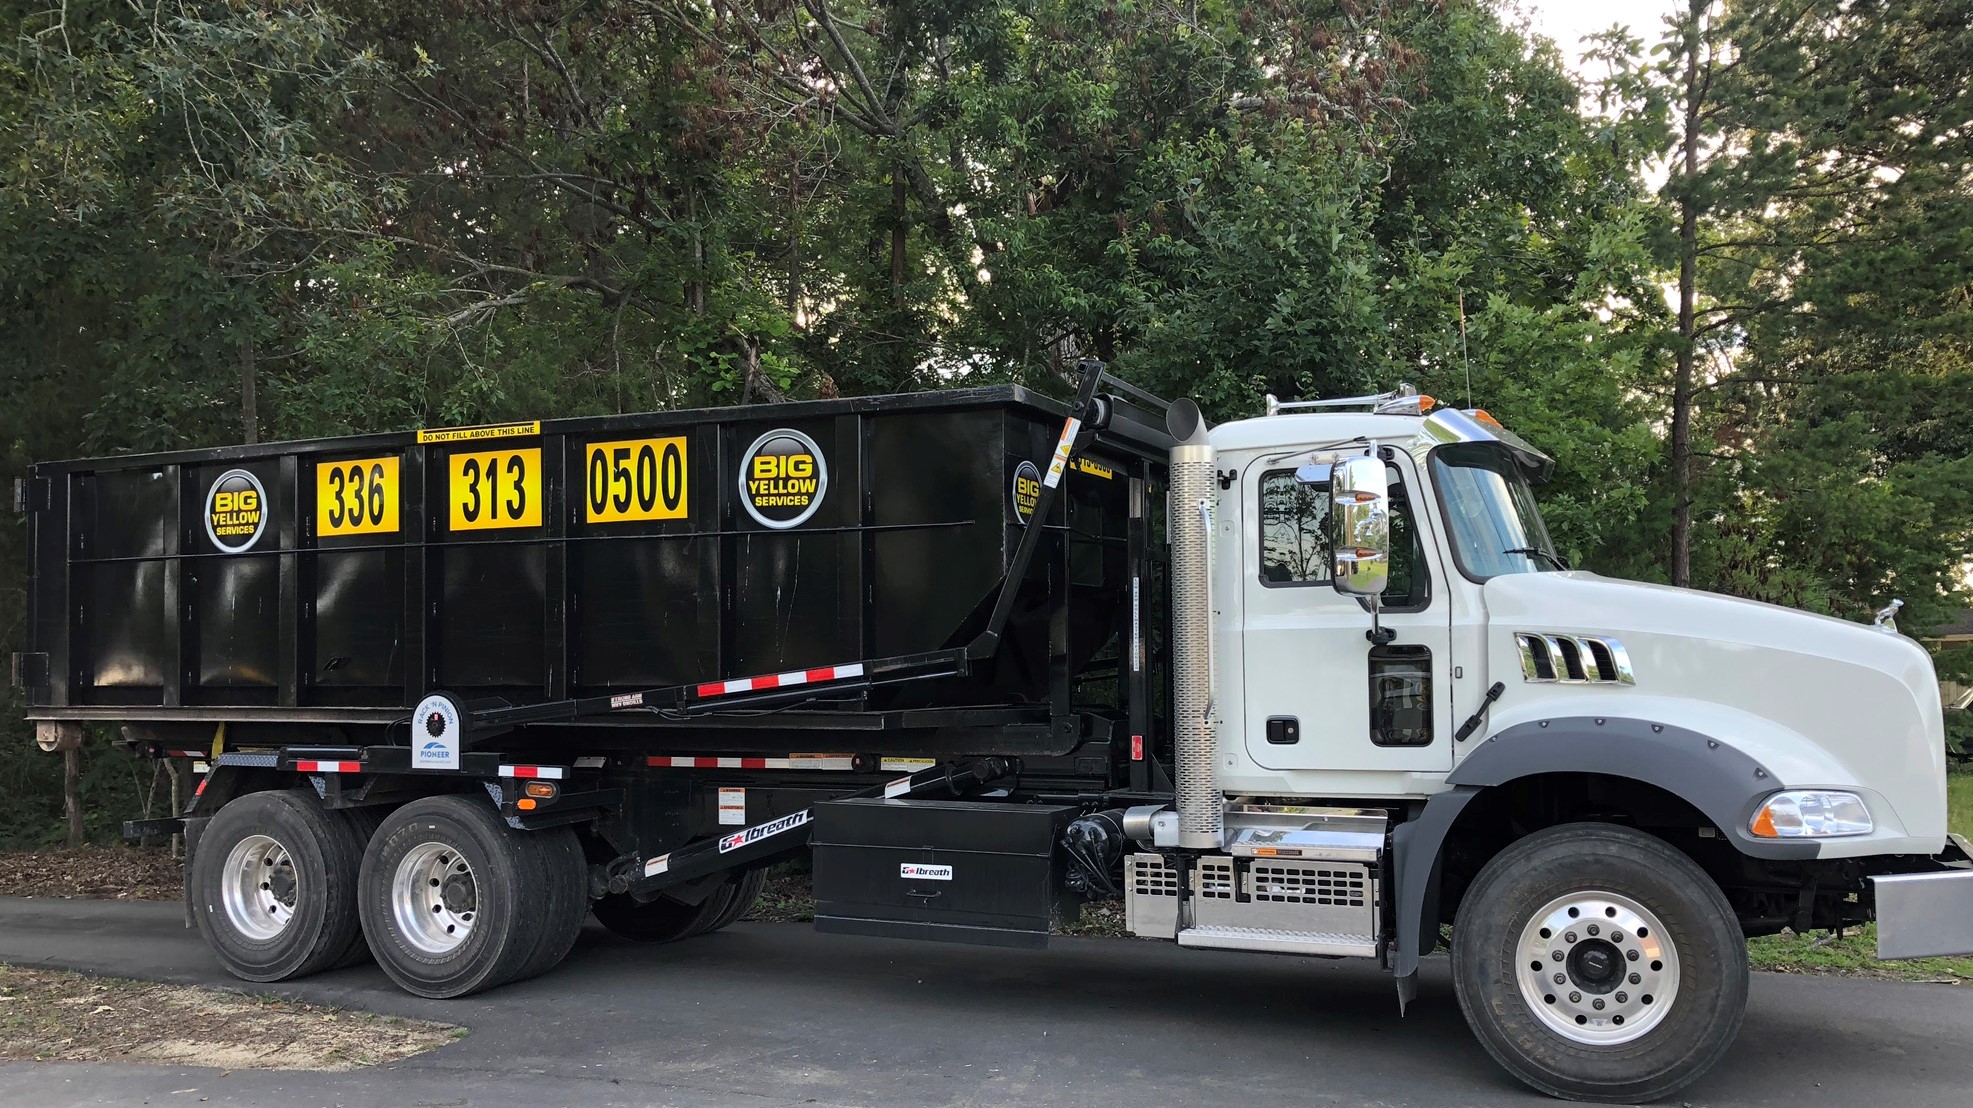 30yardTruck Dumpster Services